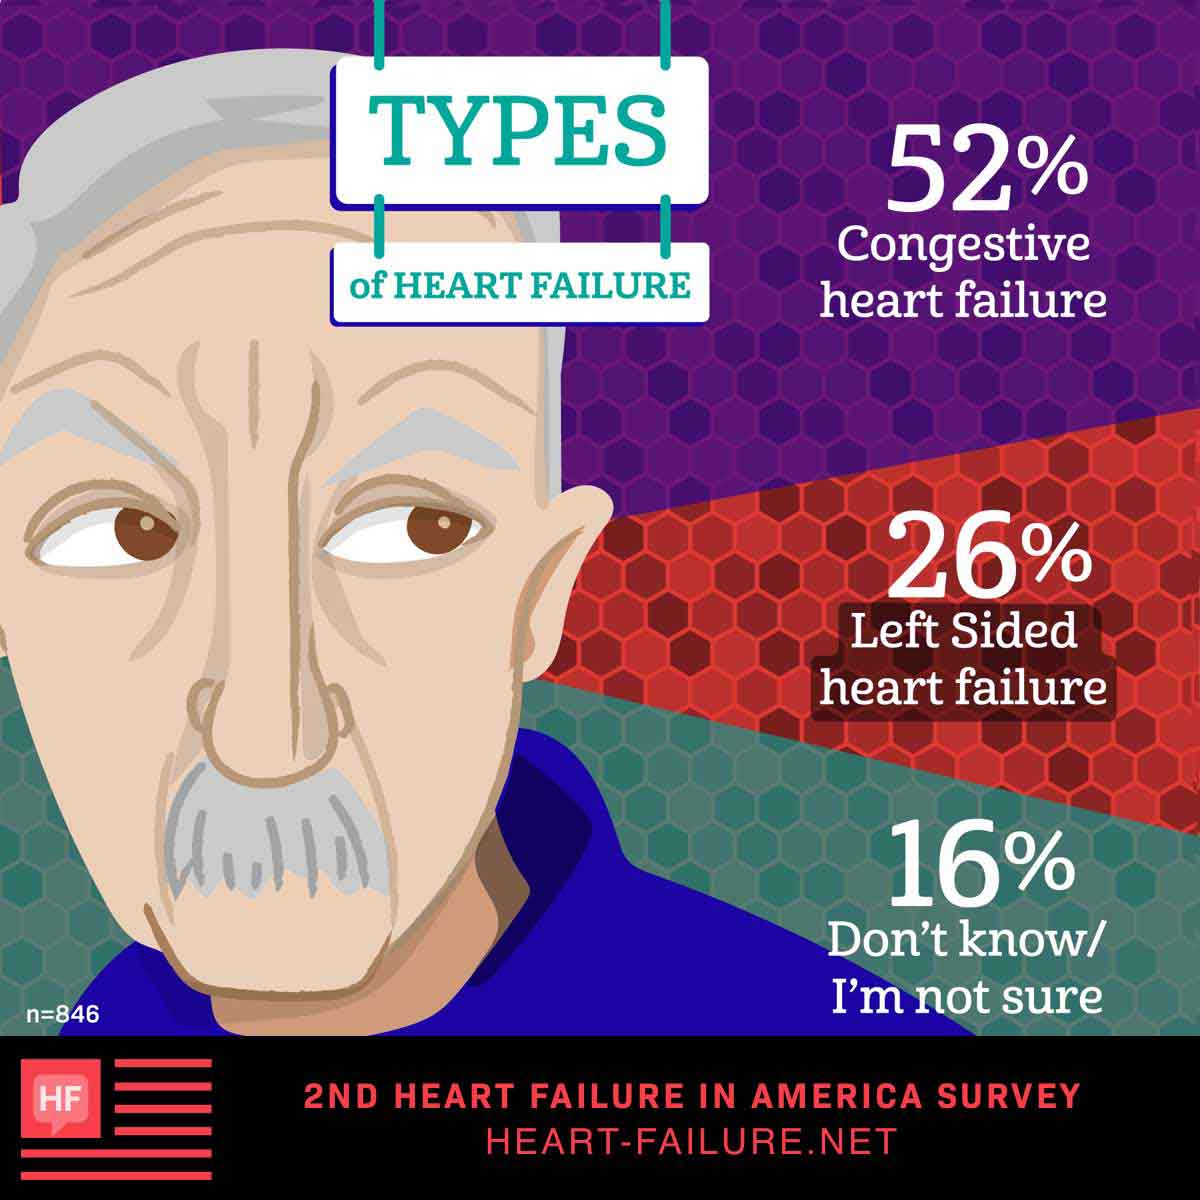 Types of heart failure: Congestive heart failure: 52%, Left-sided heart failure: 26%, I don’t know/I’m not sure: 16%. 